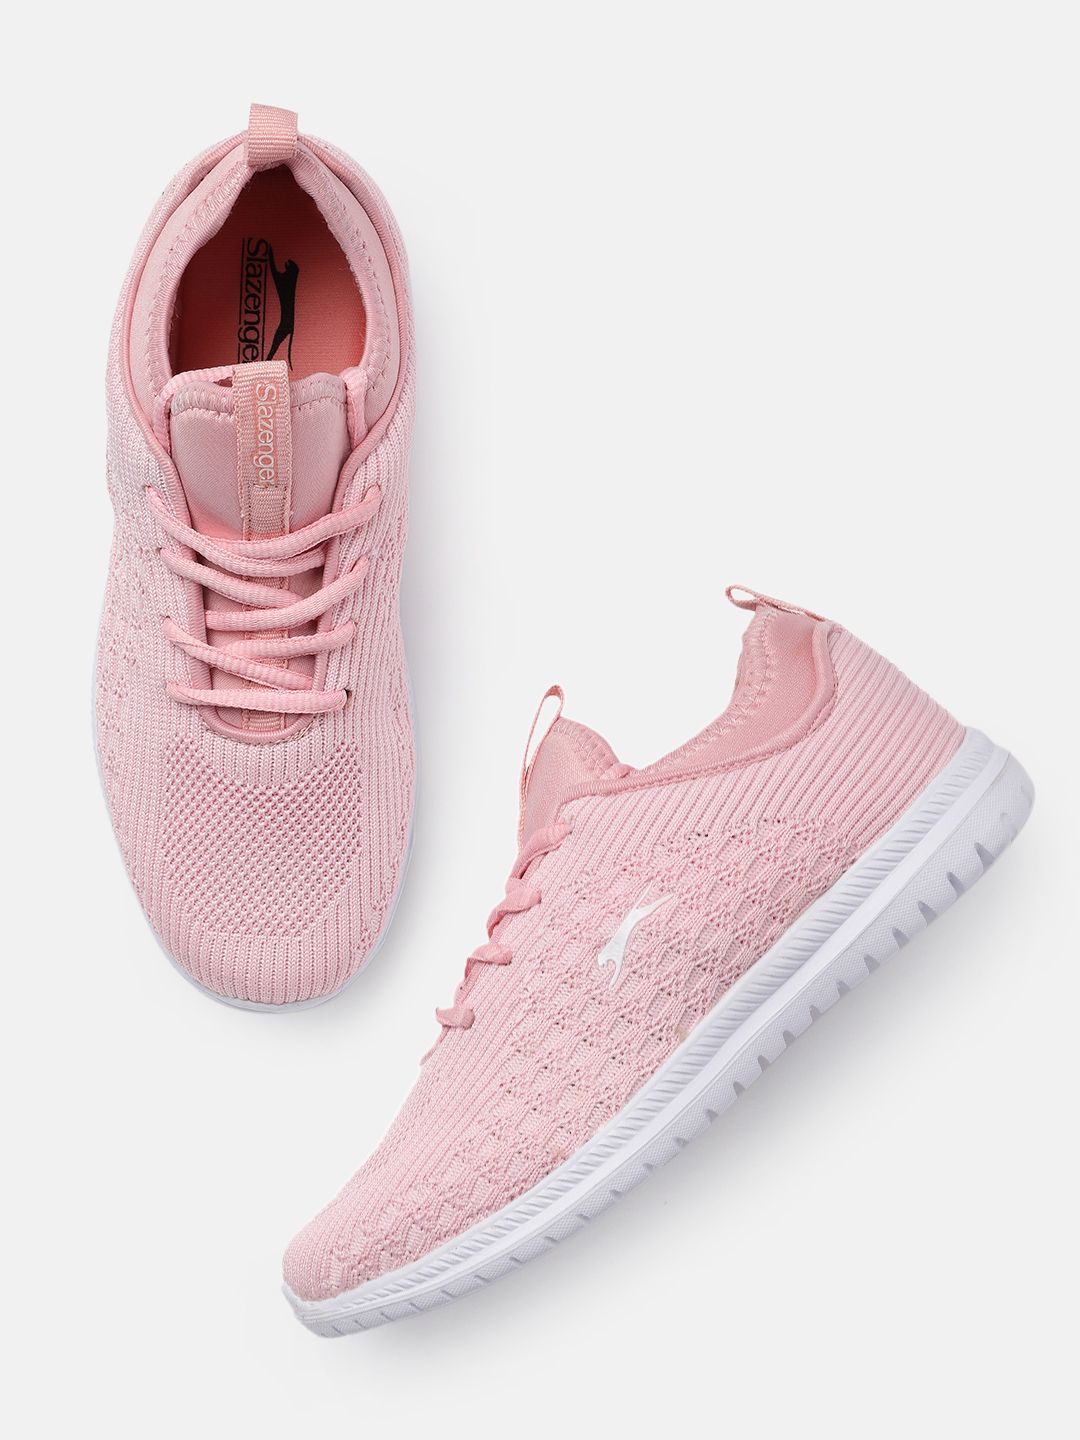 Slazenger Women Pink Running Shoes Price in India